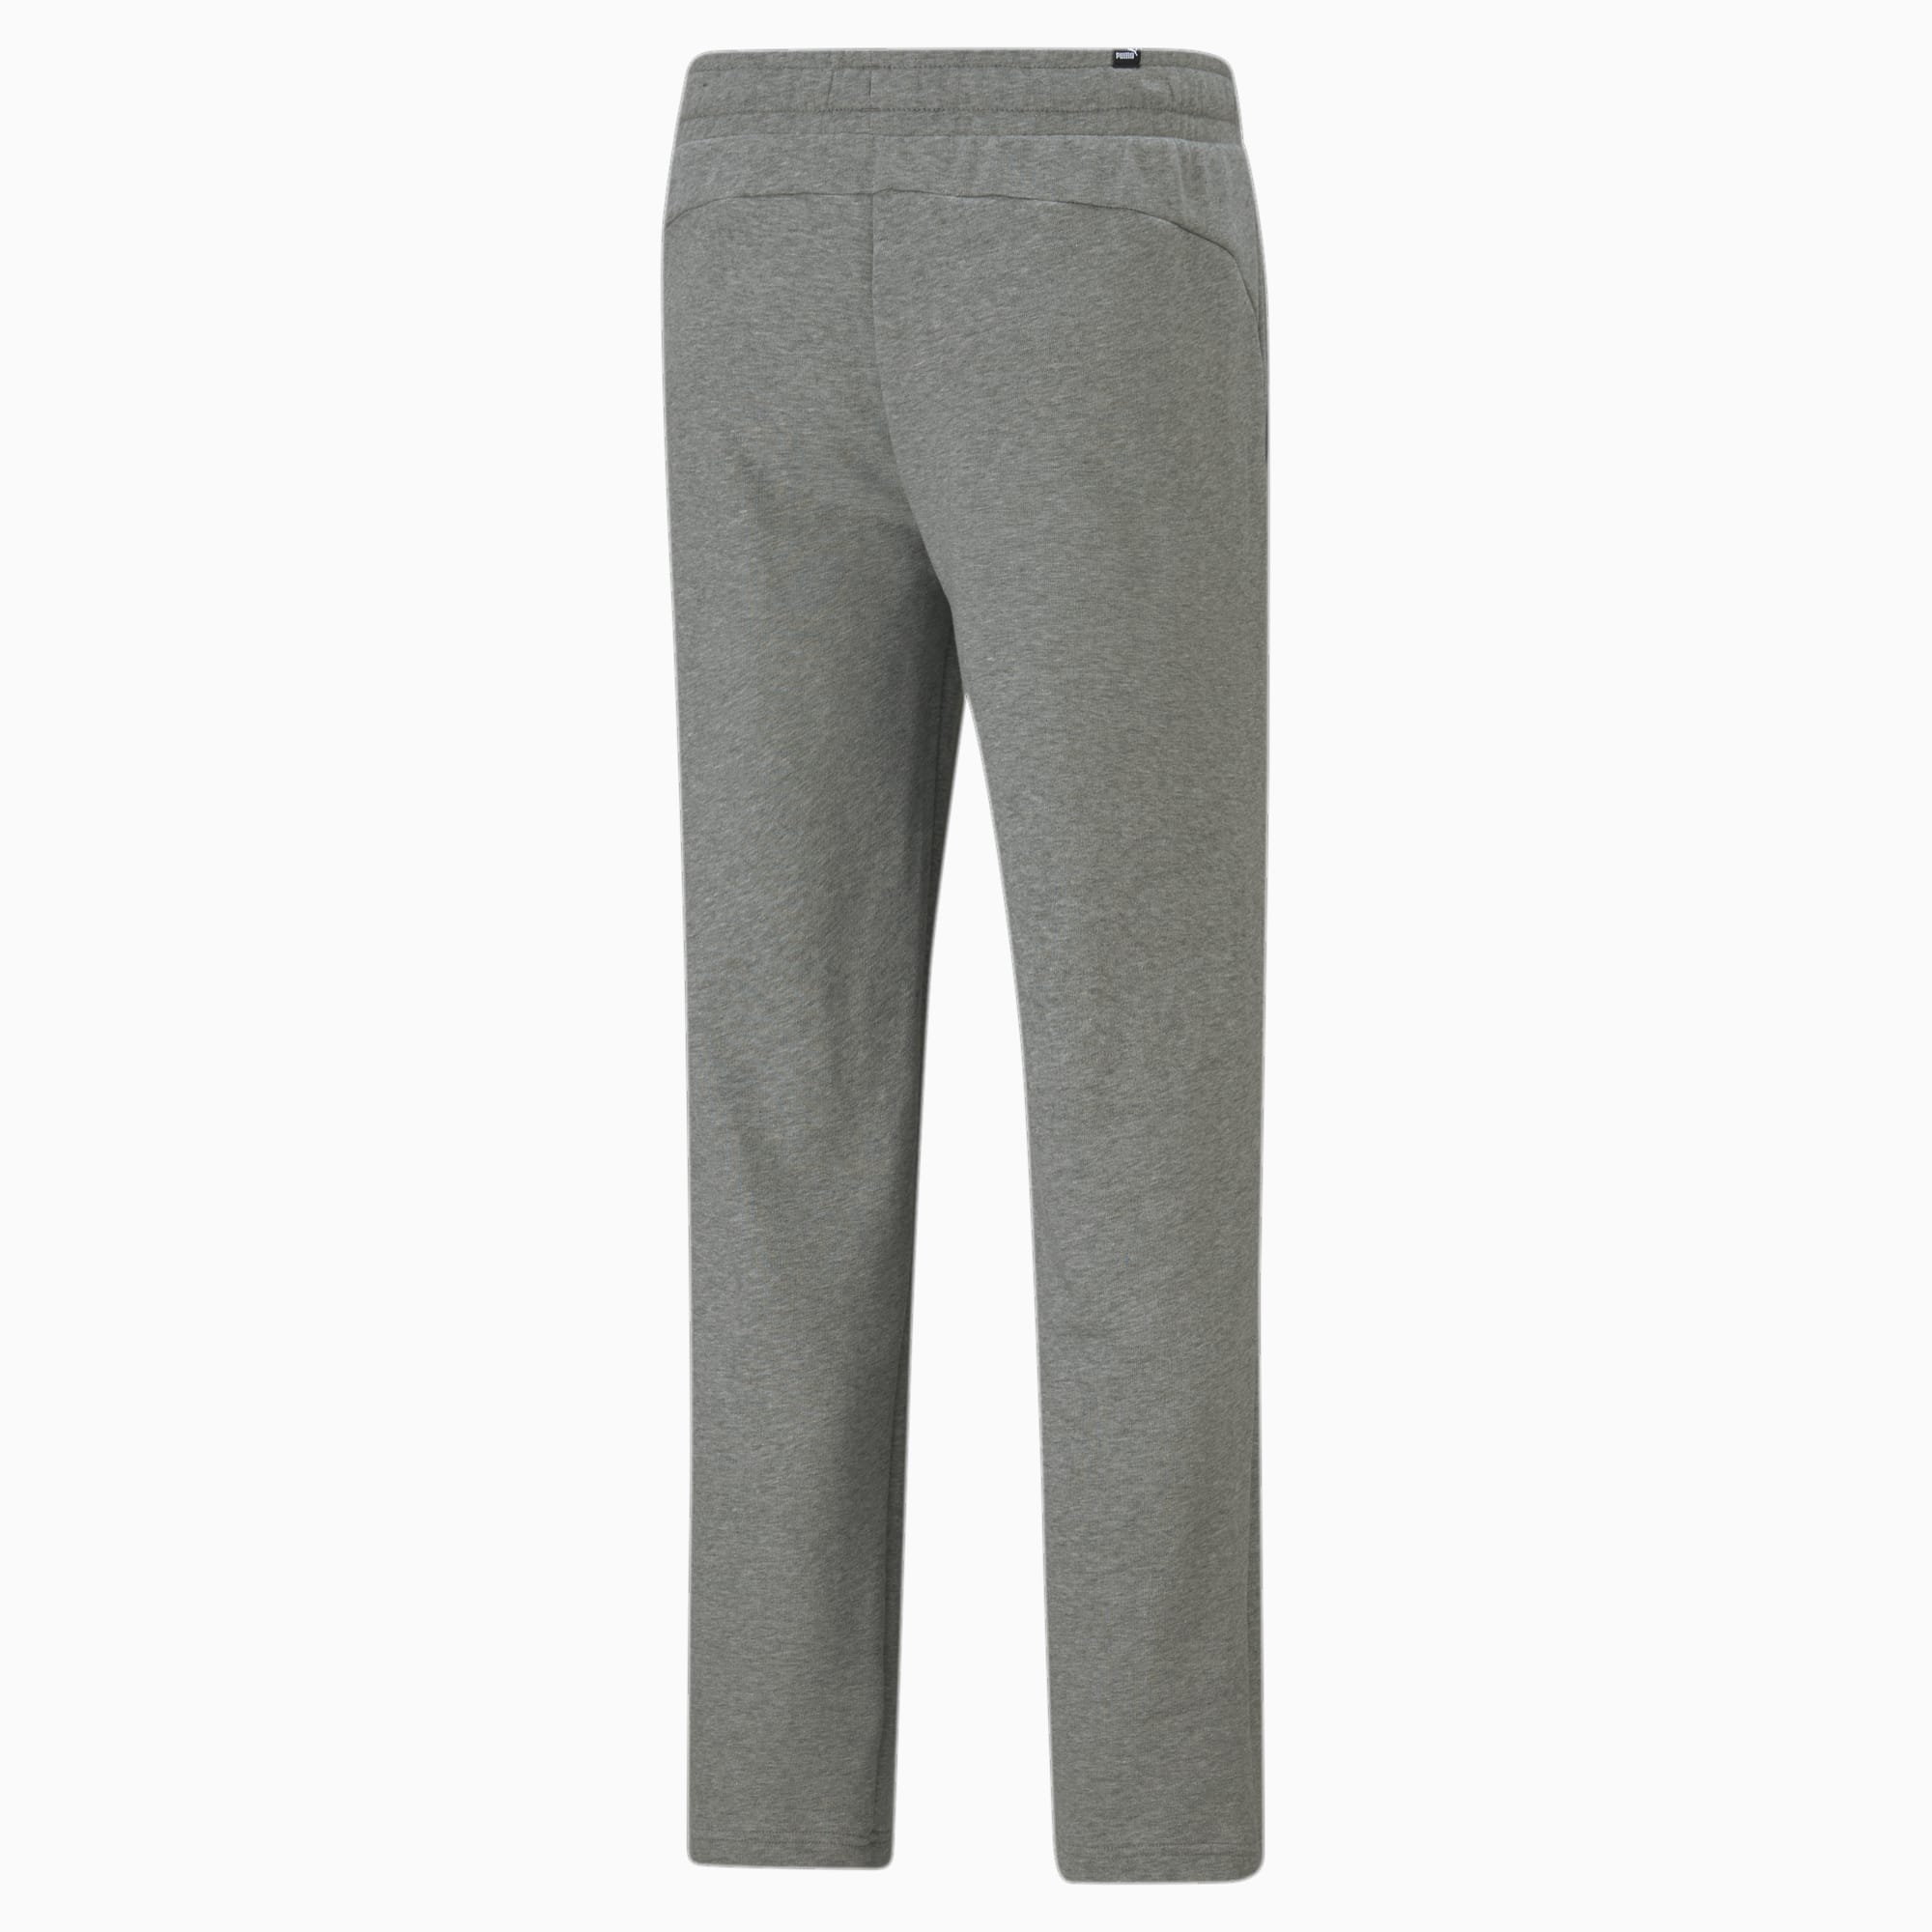 PUMA Essentials Logo Men's Sweatpants, Medium Grey Heather, Size 3XL, Clothing